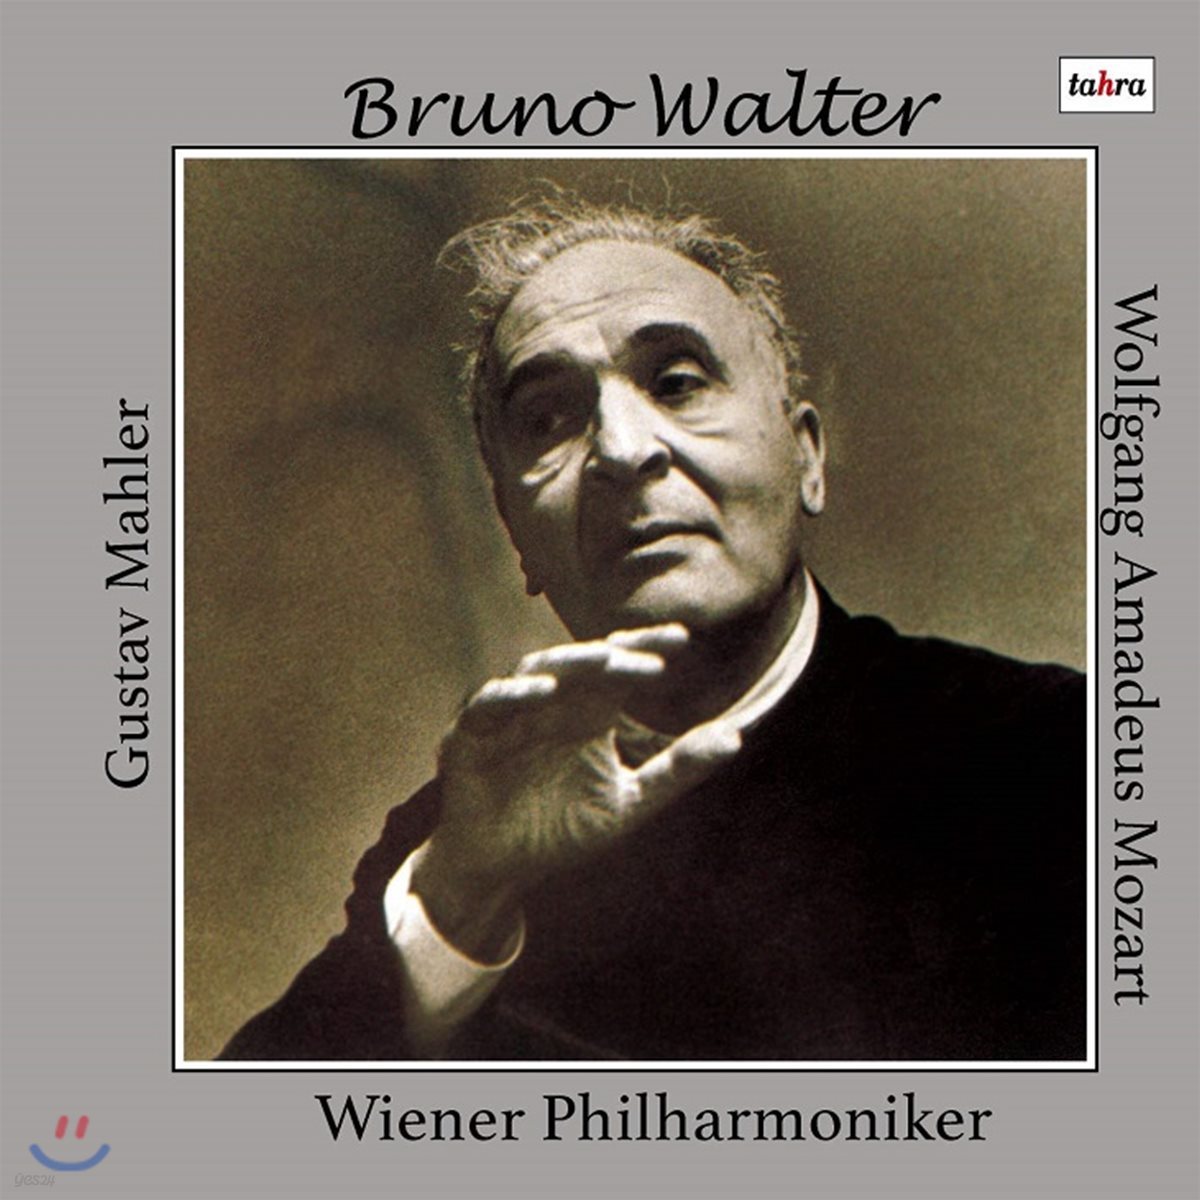 Bruno Walter 말러: 대지의 노래 / 모차르트: 교향곡 40번 (Mahler: Das Lied von der Erde / Mozart: Symphony No. 40) 브루노 발터, 빈 필하모닉 오케스트라